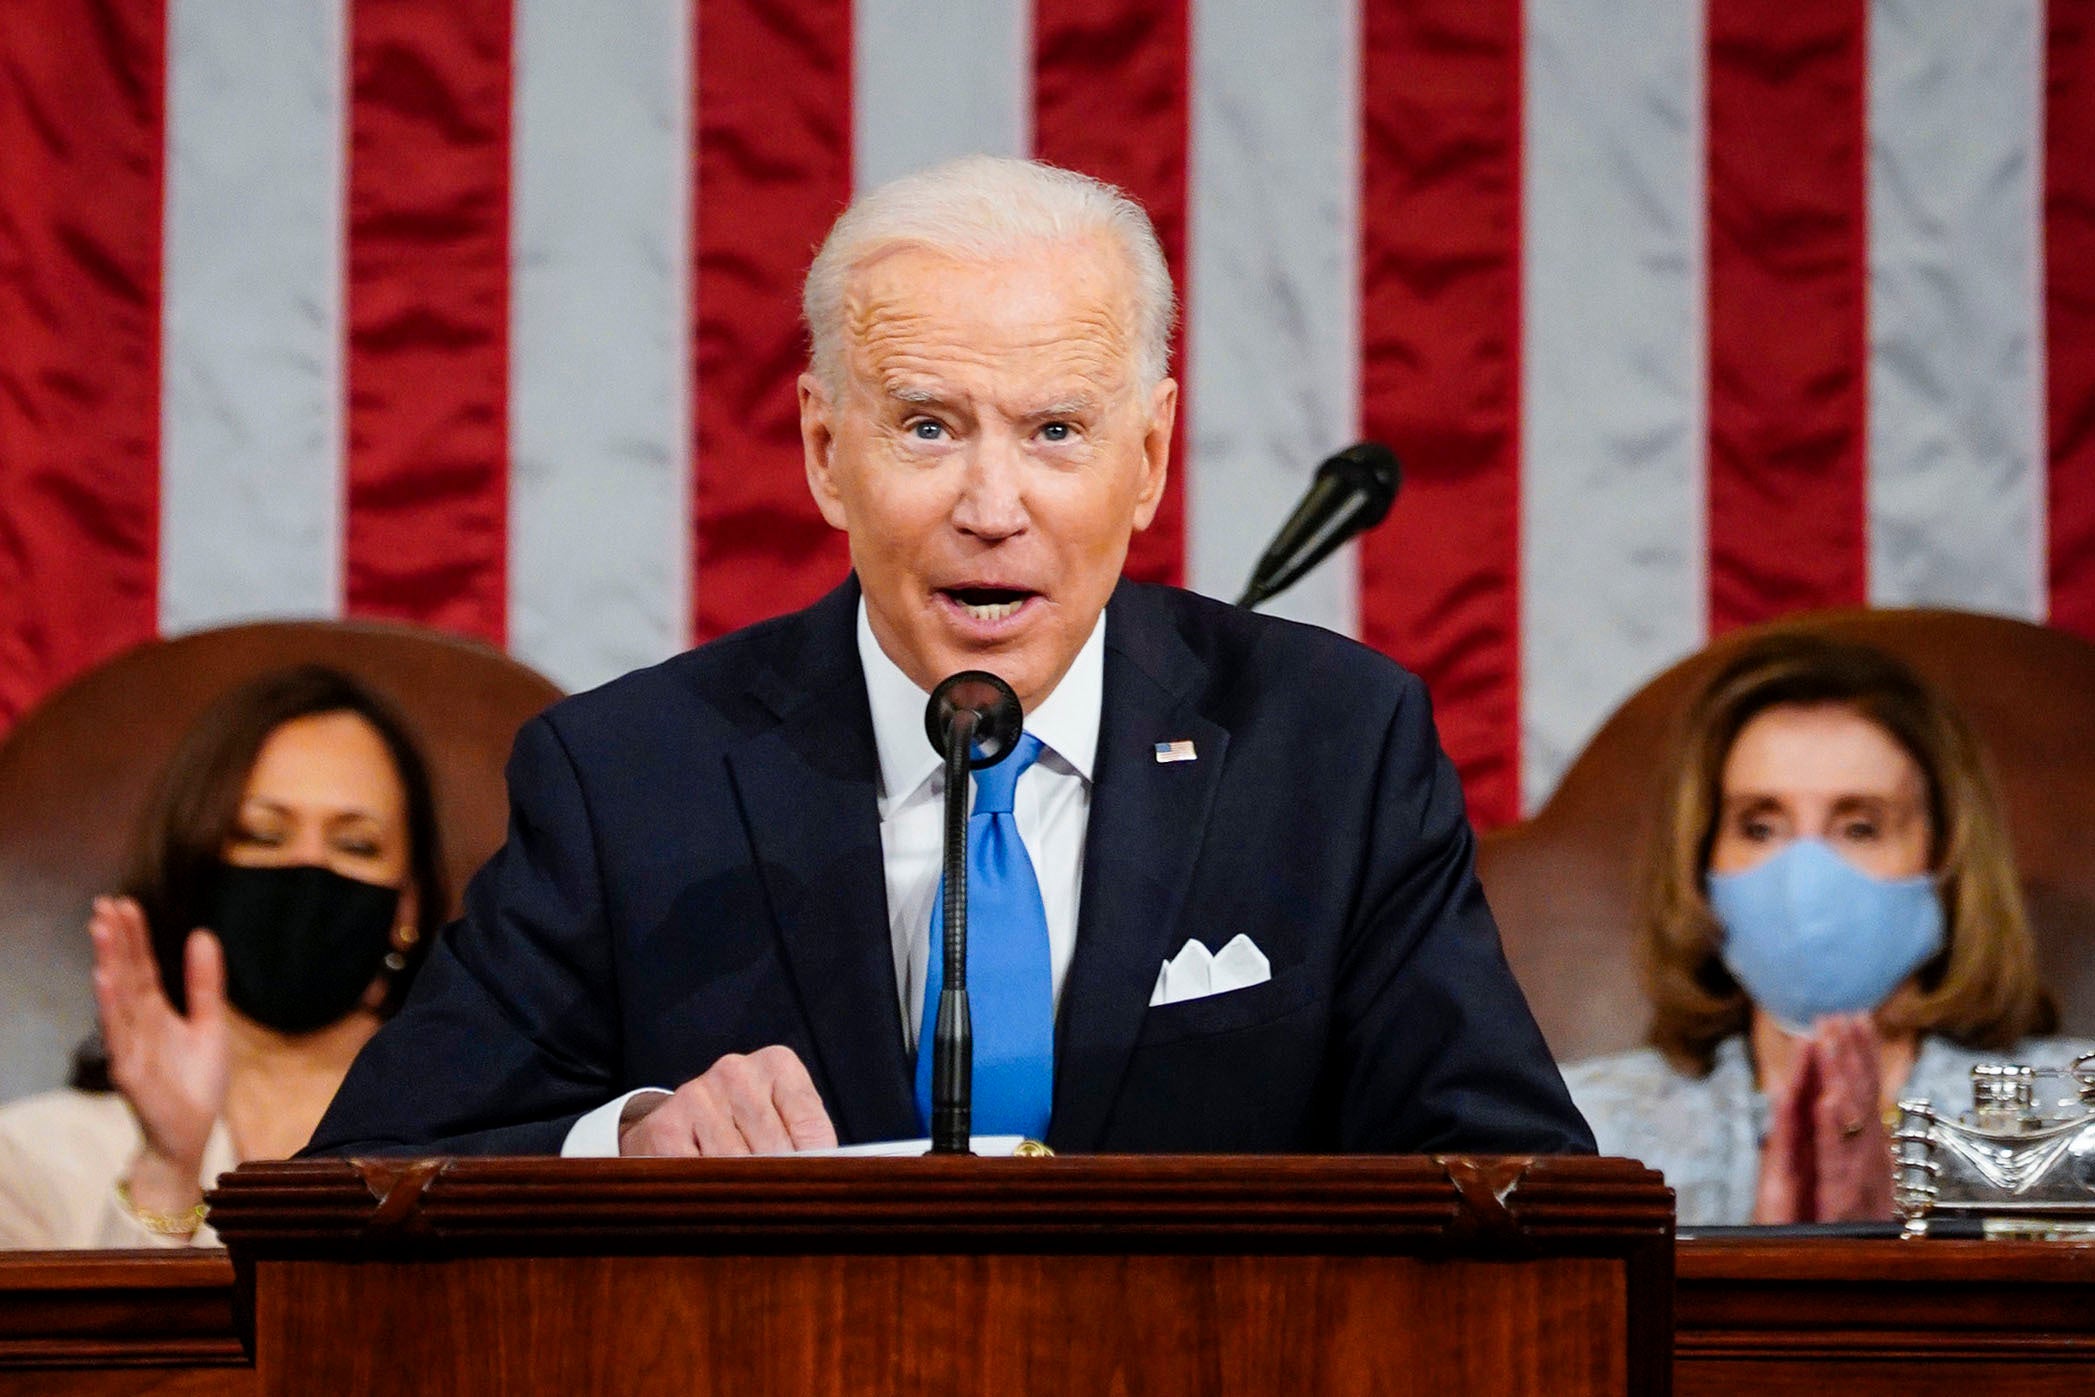 President Joe Biden addresses the joint session of Congress on 28 April